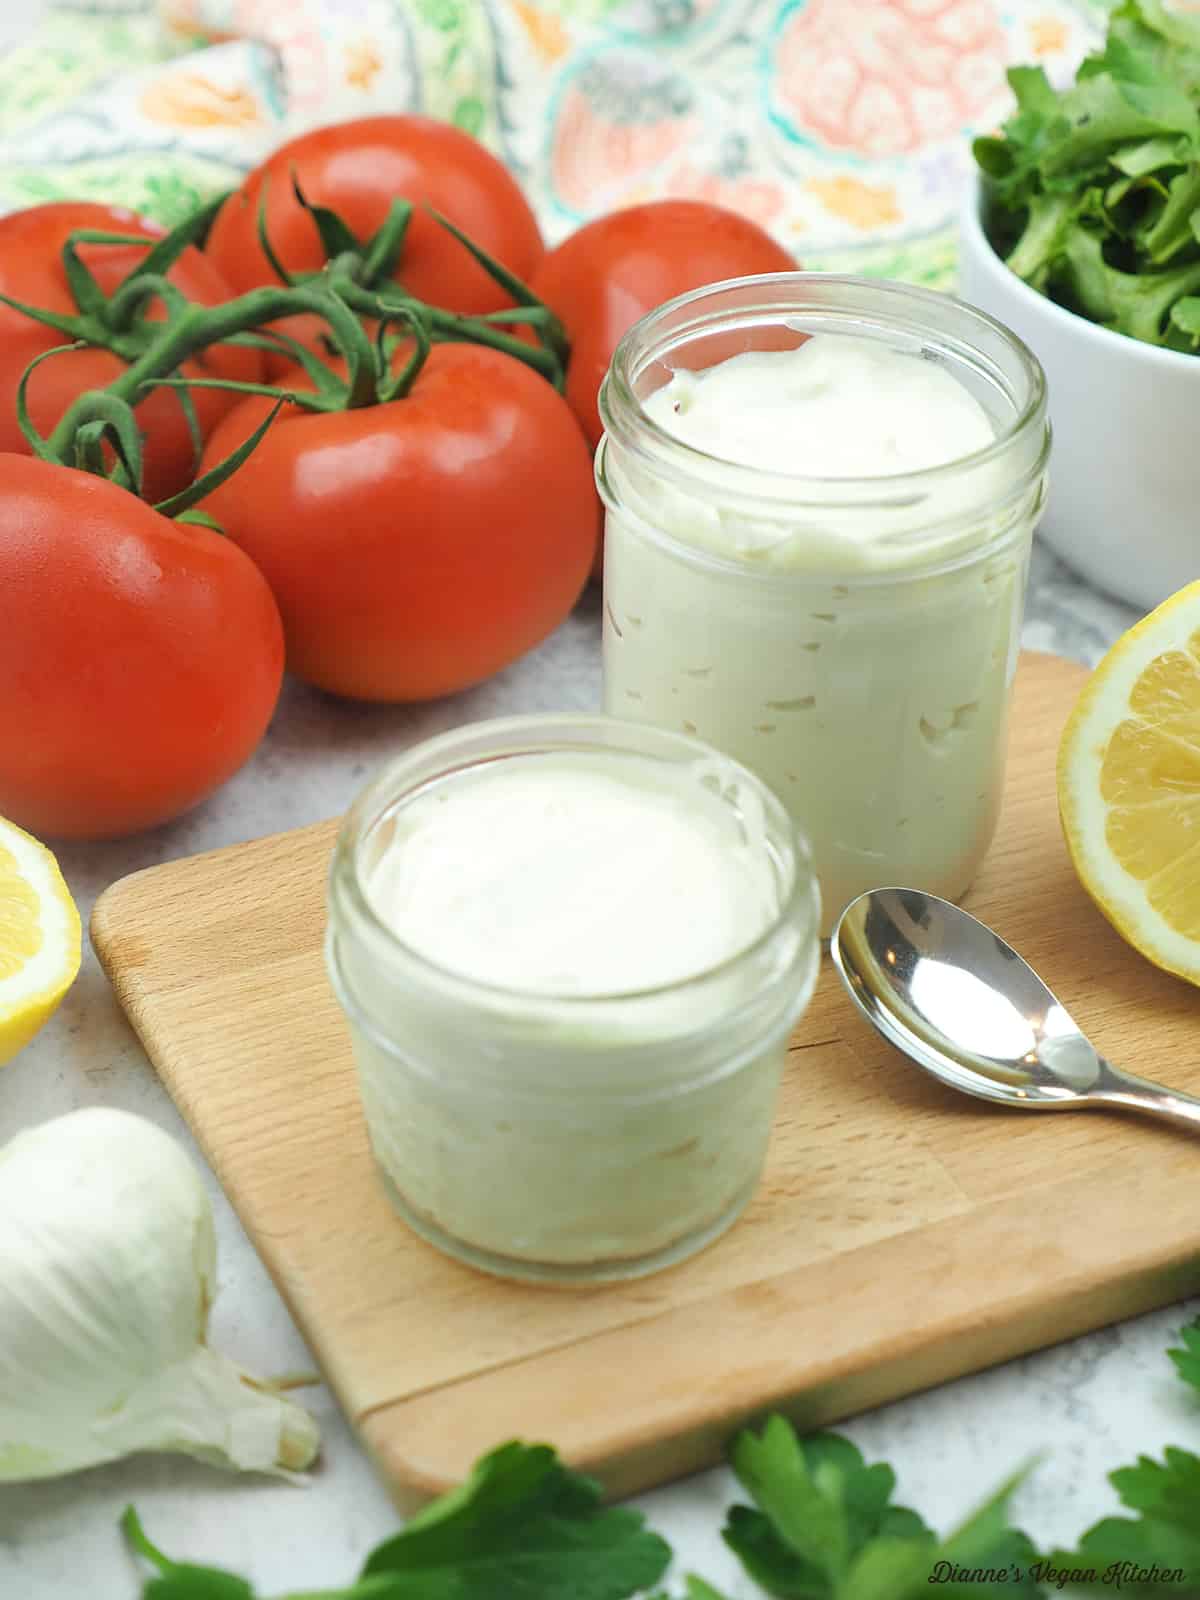 two jars of vegan mayonnaise with tomatoes, salad, lemons, and garlic